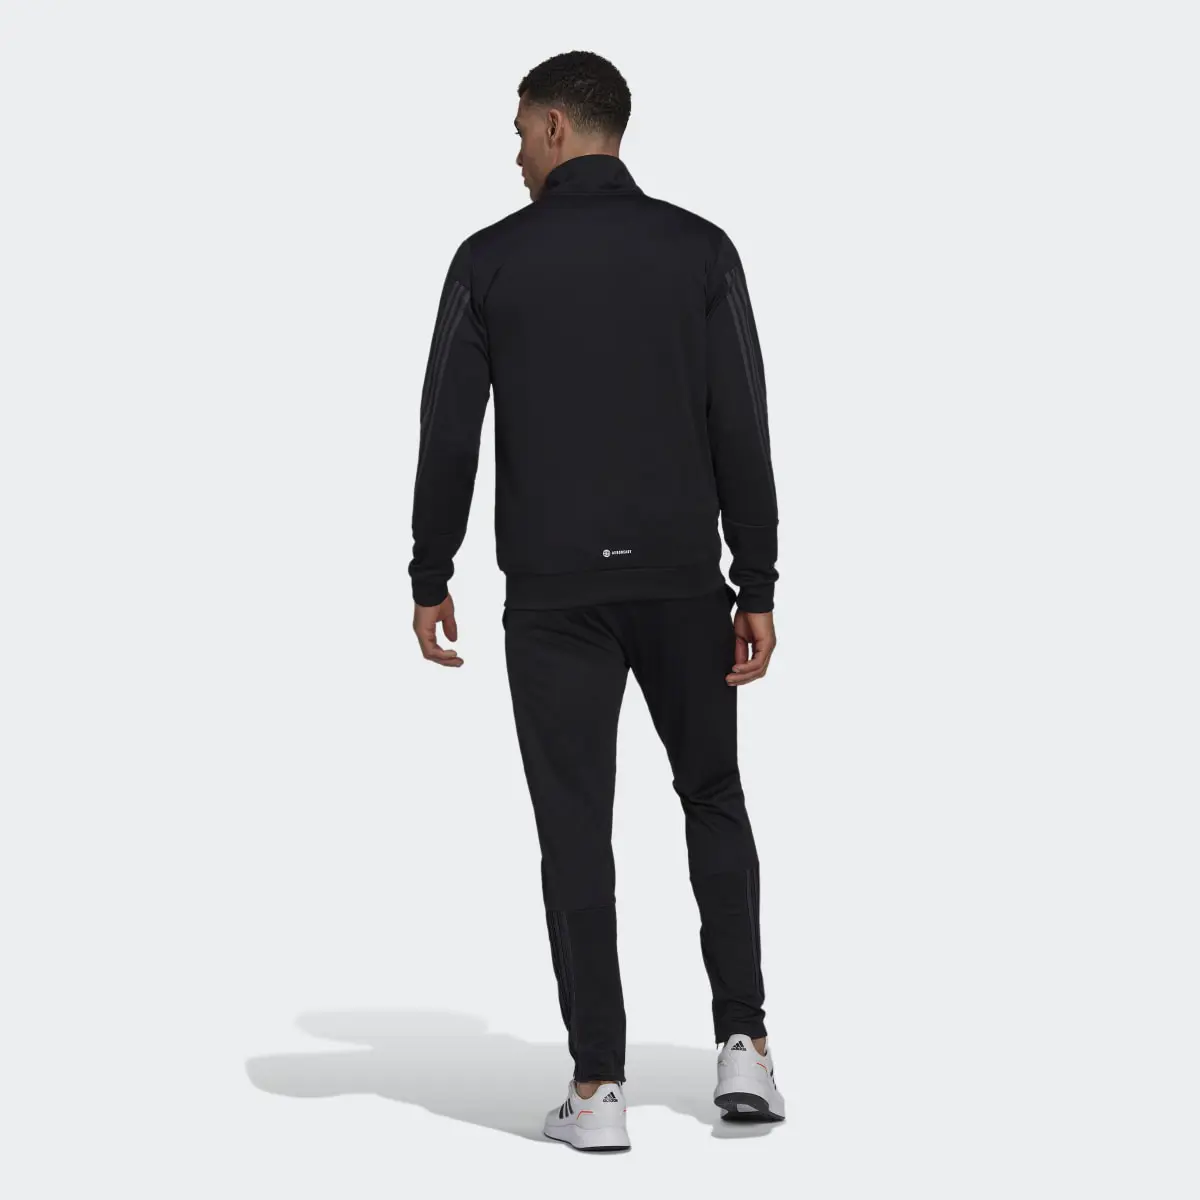 Adidas Slim Zipped Track Suit. 3